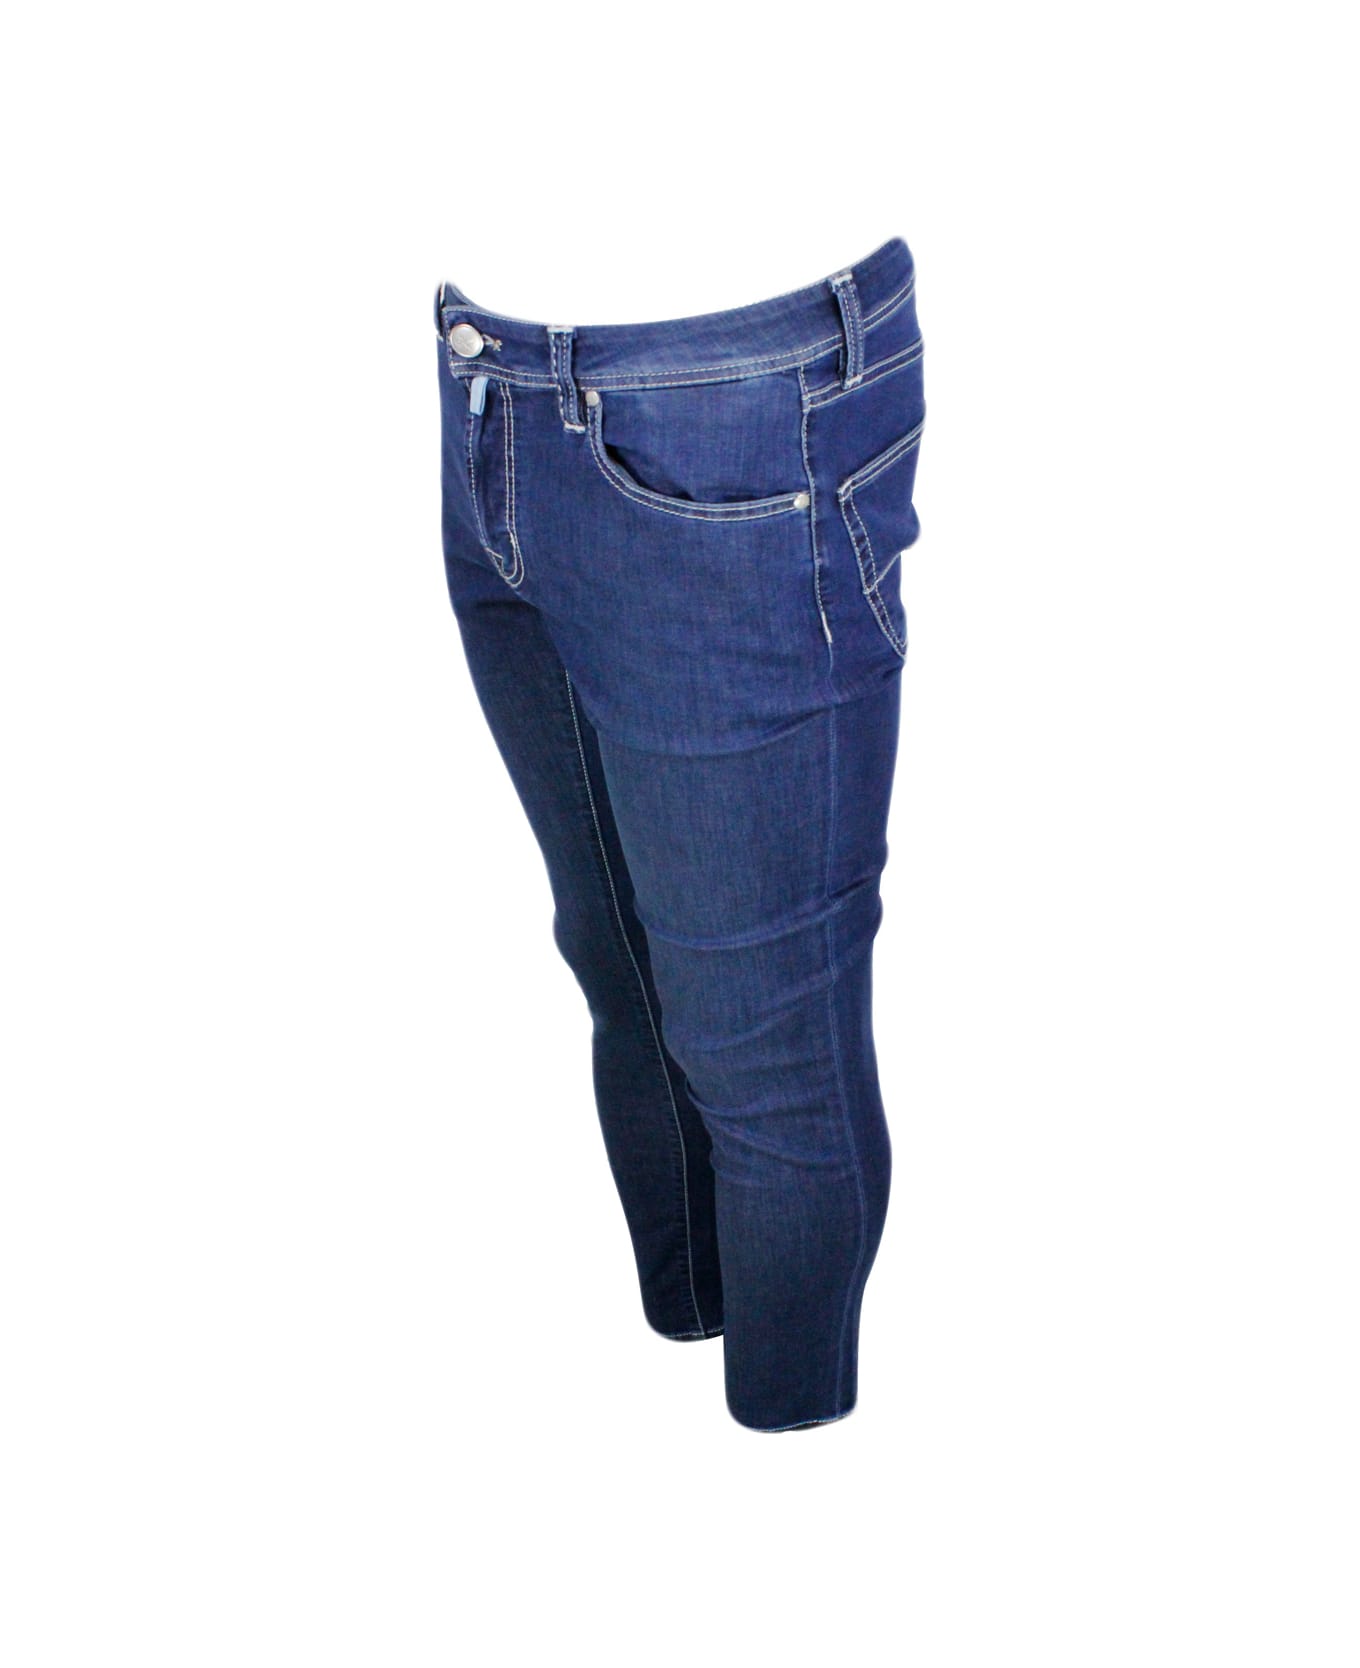 Sartoria Tramarossa Leonardo Zip Trousers In 5-pocket Super Stretch Selvedge Denim With Tone-on-tone Tailored Stitching And Suede Tab And Zip Closure - Denim